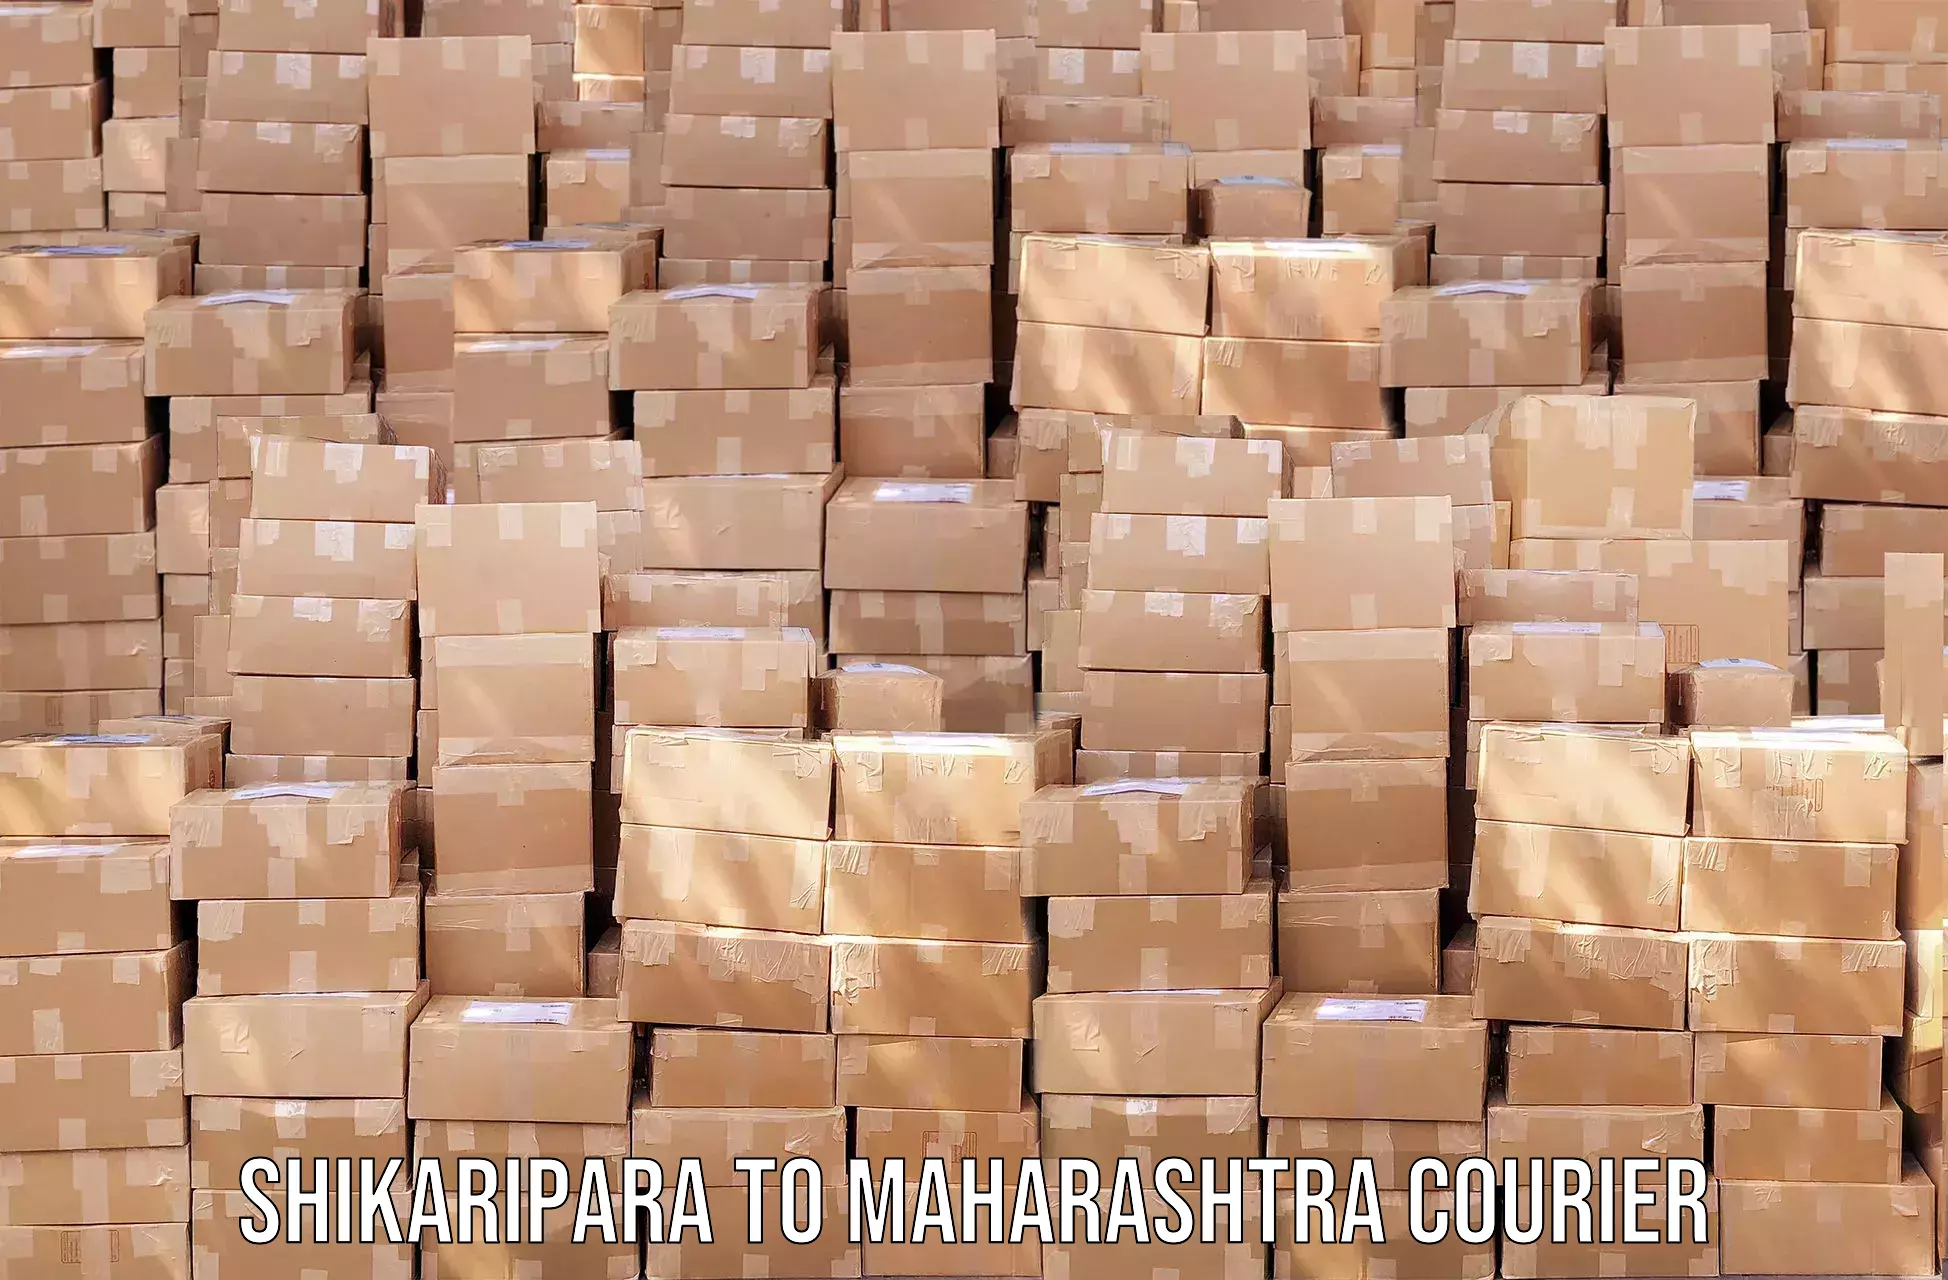 Pharmaceutical courier Shikaripara to Bhusawal